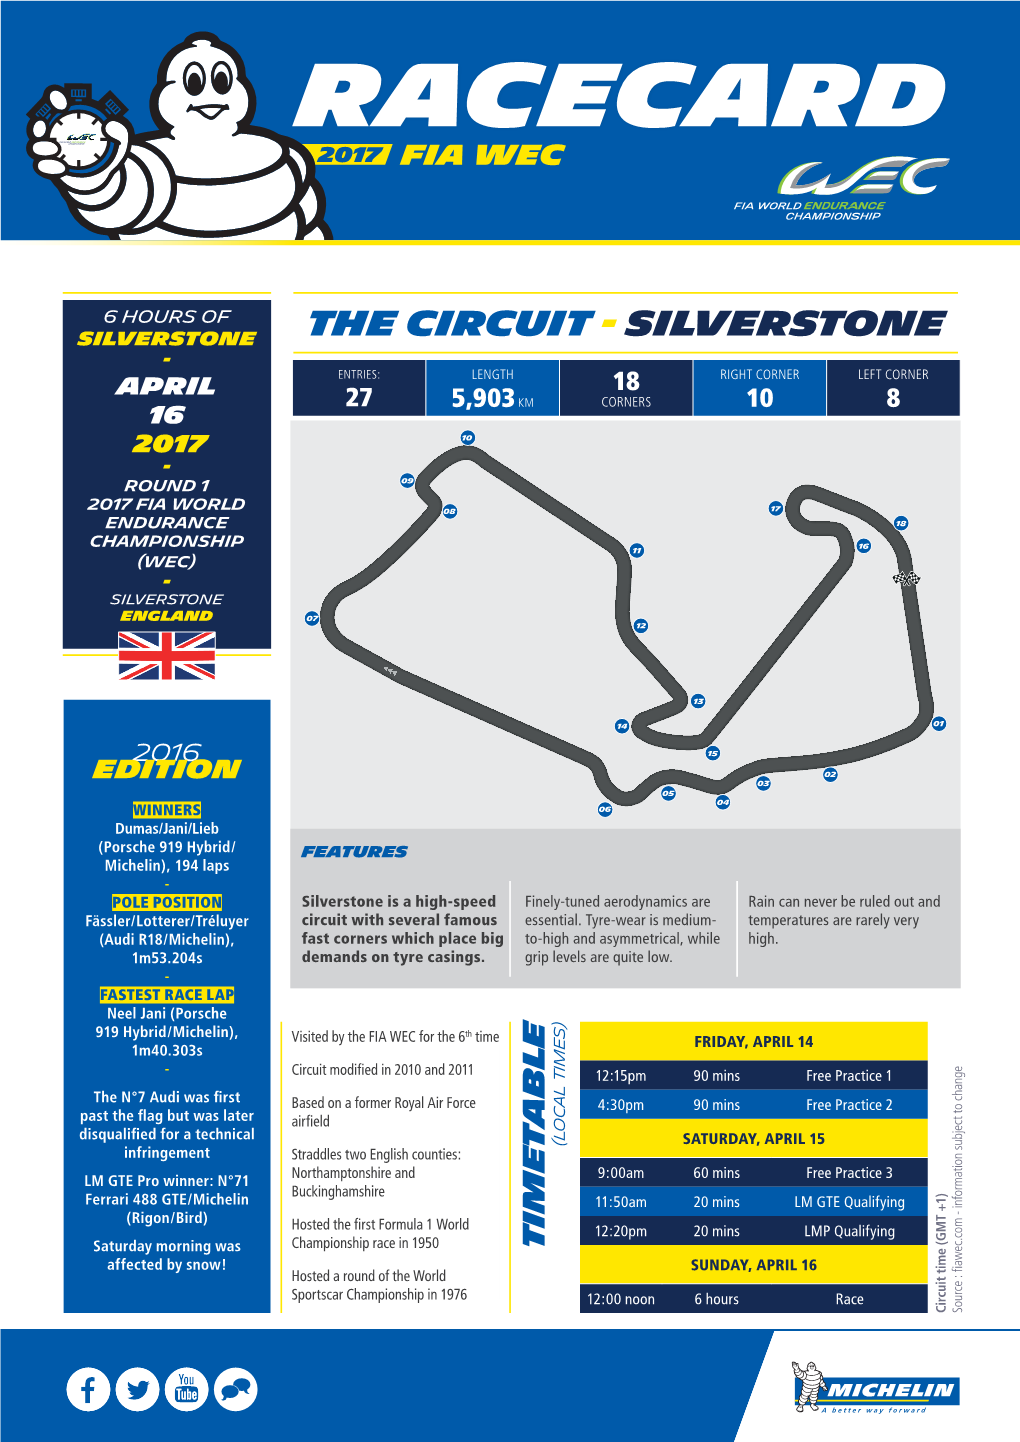 Silverstone the Circuit - Silverstone - ENTRIES: LENGTH RIGHT CORNER LEFT CORNER APRIL 18 27 5,903 KM CORNERS 10 8 16 2017 10 - ROUND 1 09